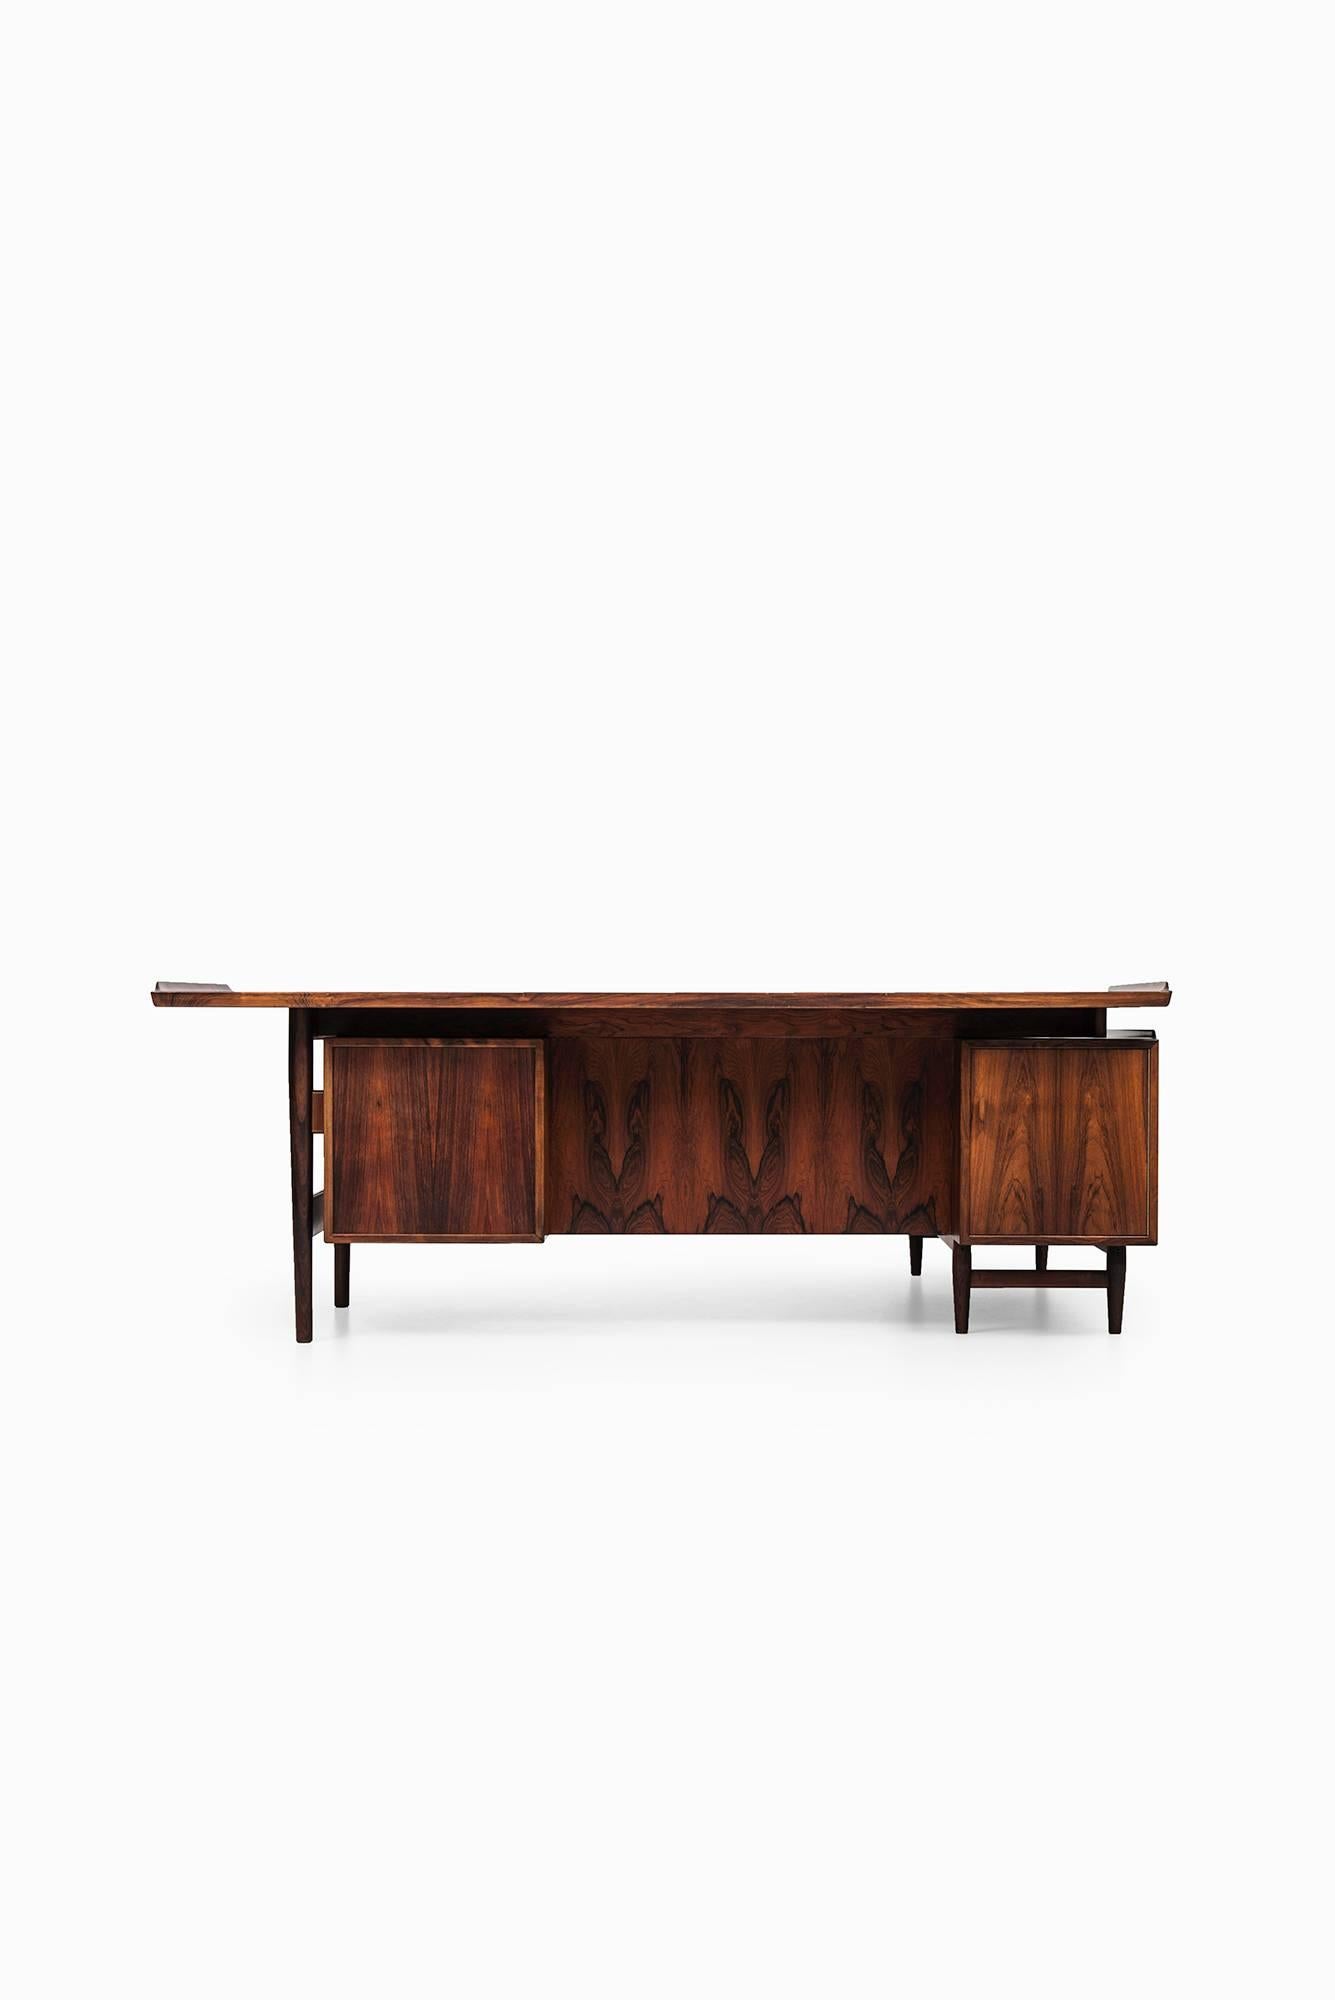 Arne Vodder L-shaped desk with sideboard model 209 In Excellent Condition In Limhamn, Skåne län